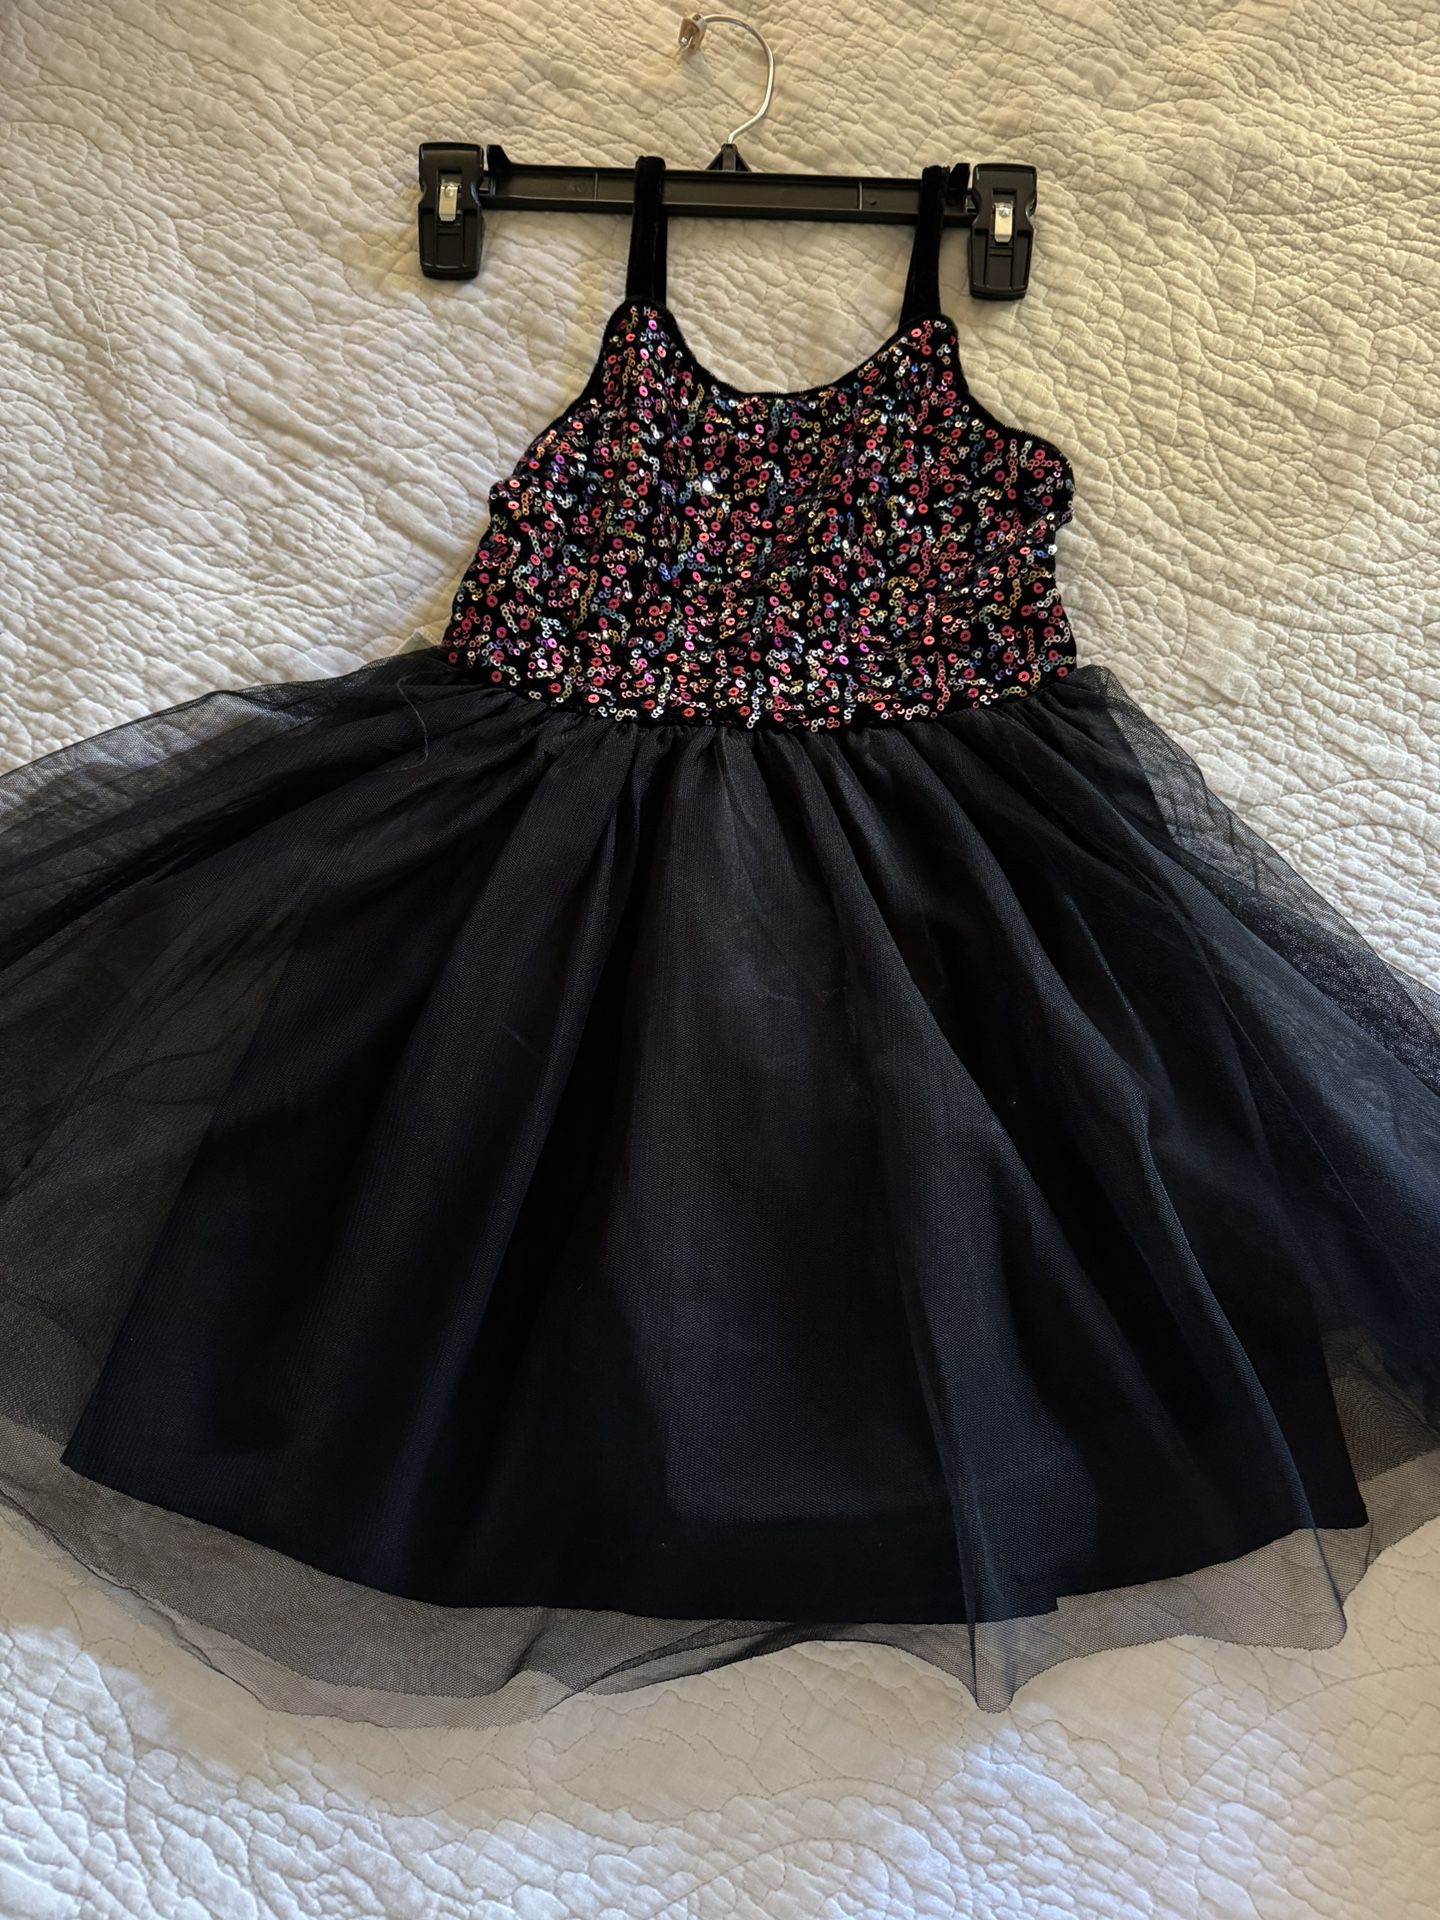 Cat & Jack Sequins Kids Dress, Black, Size 6 Years 